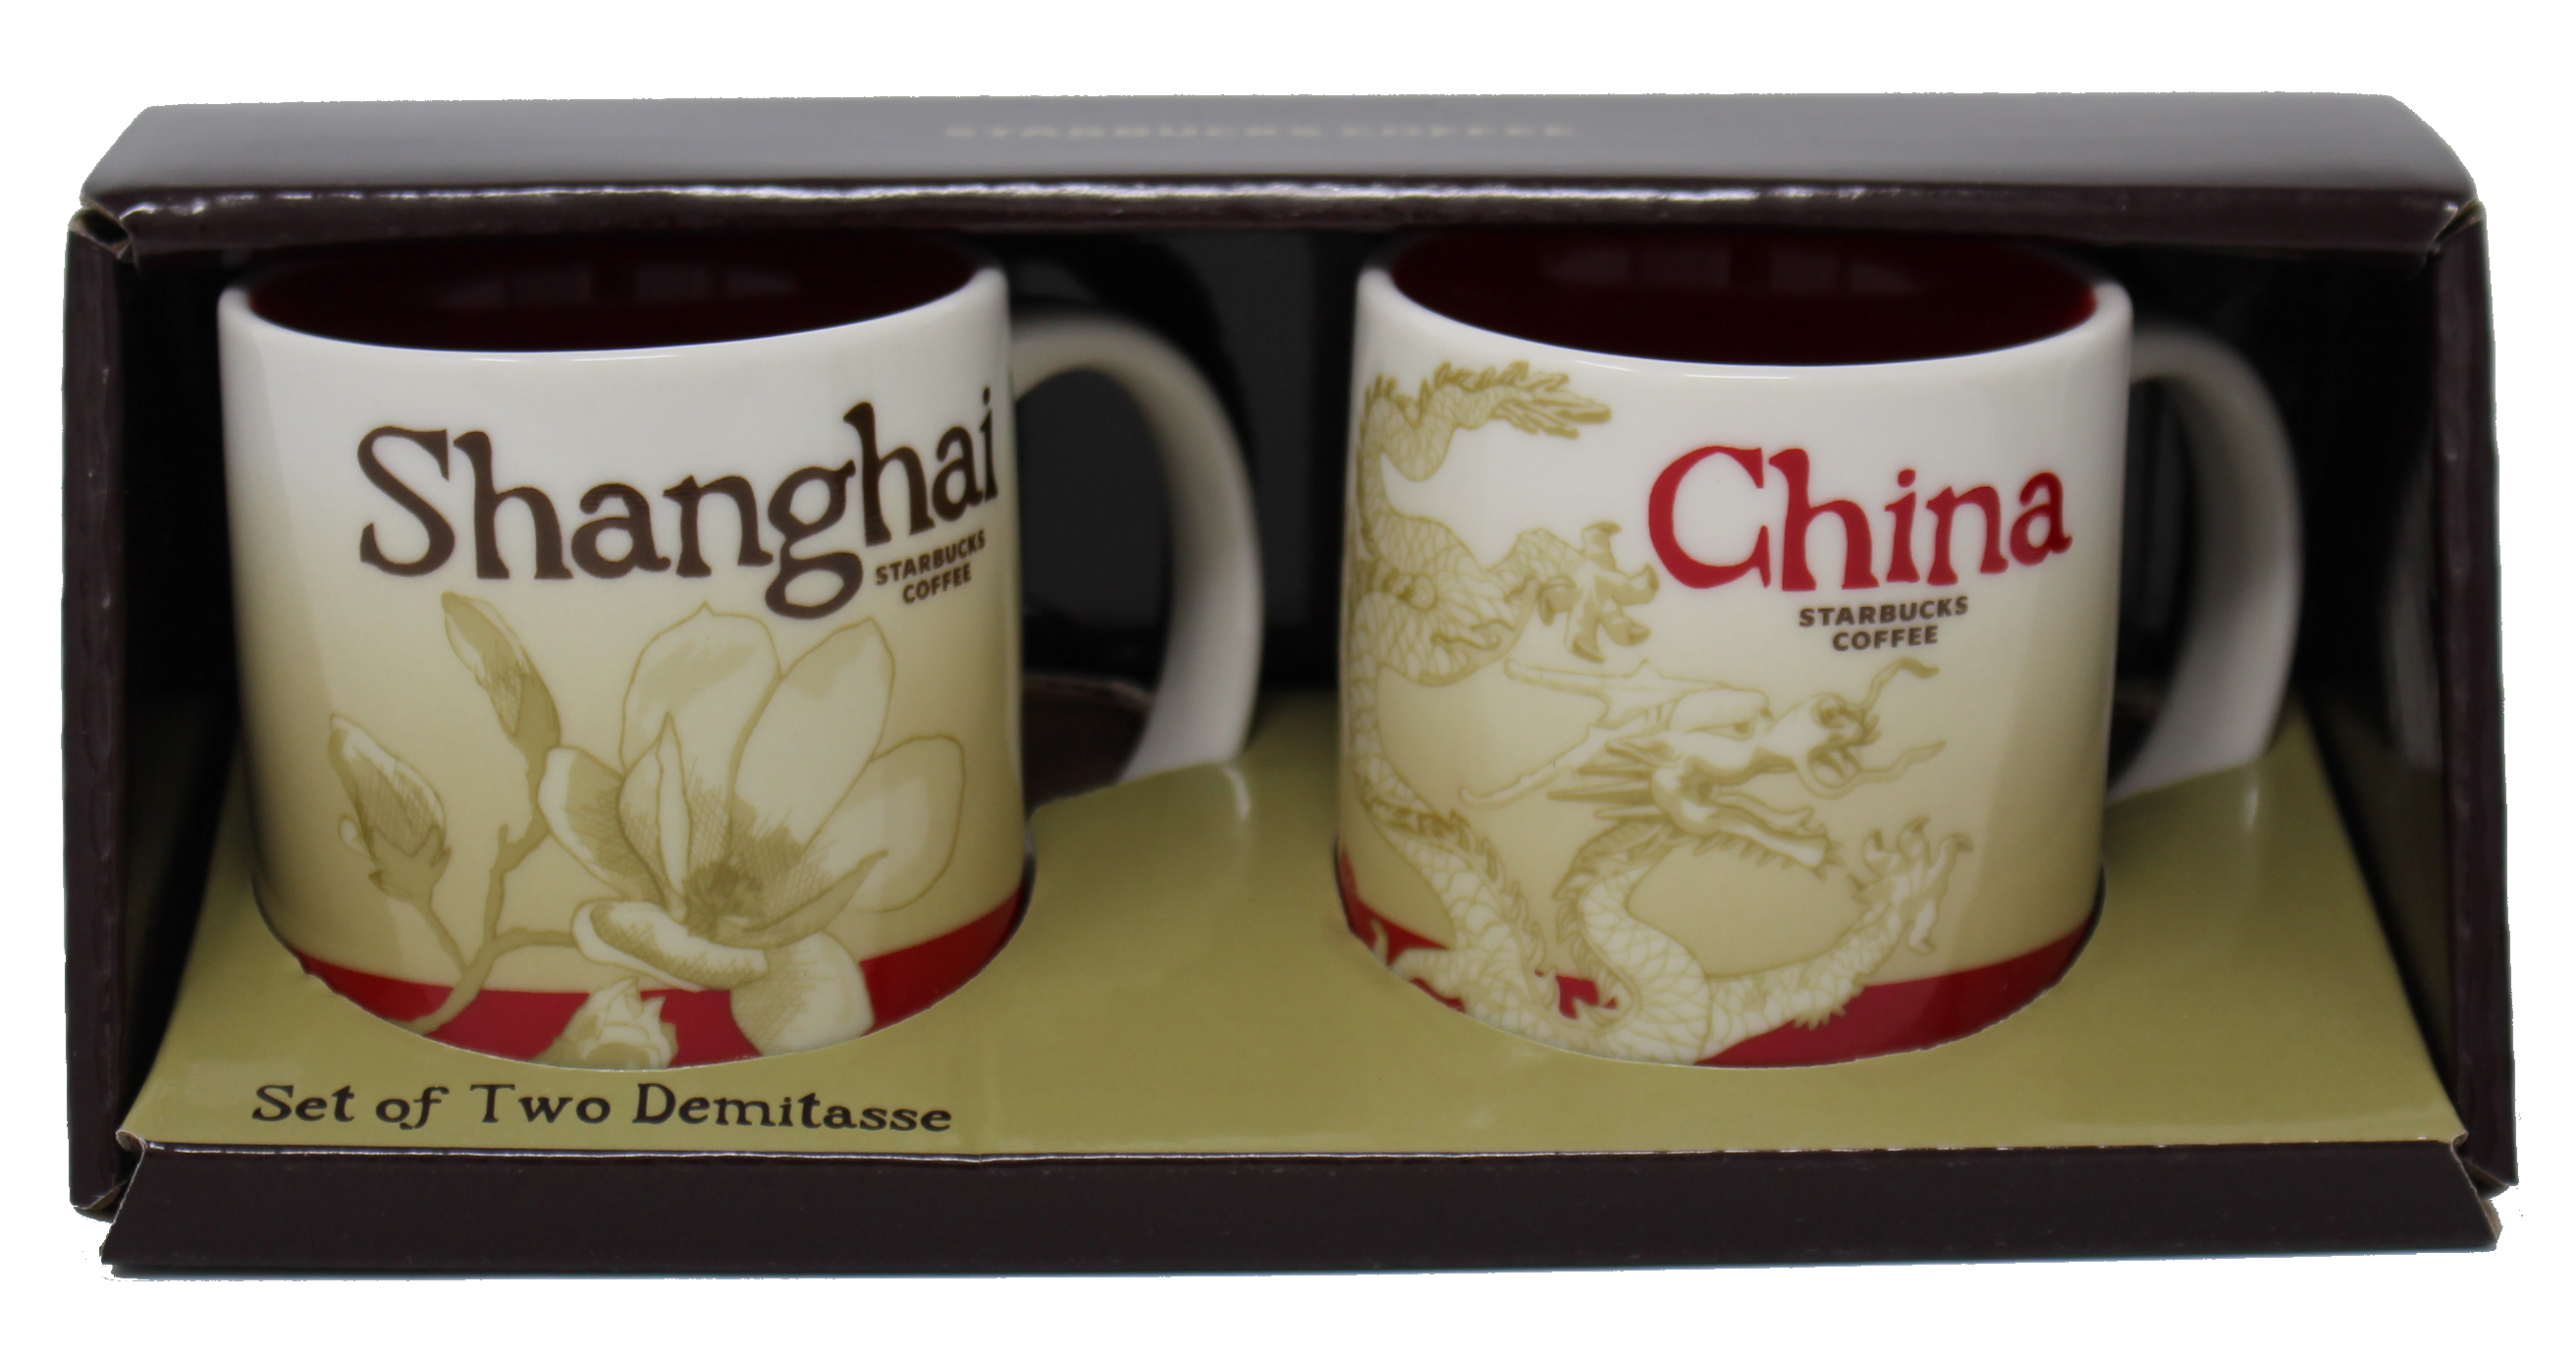 Starbucks Global Icon Series Shanghai and China Demitasse Mugs, 3 Oz (Set of 2)